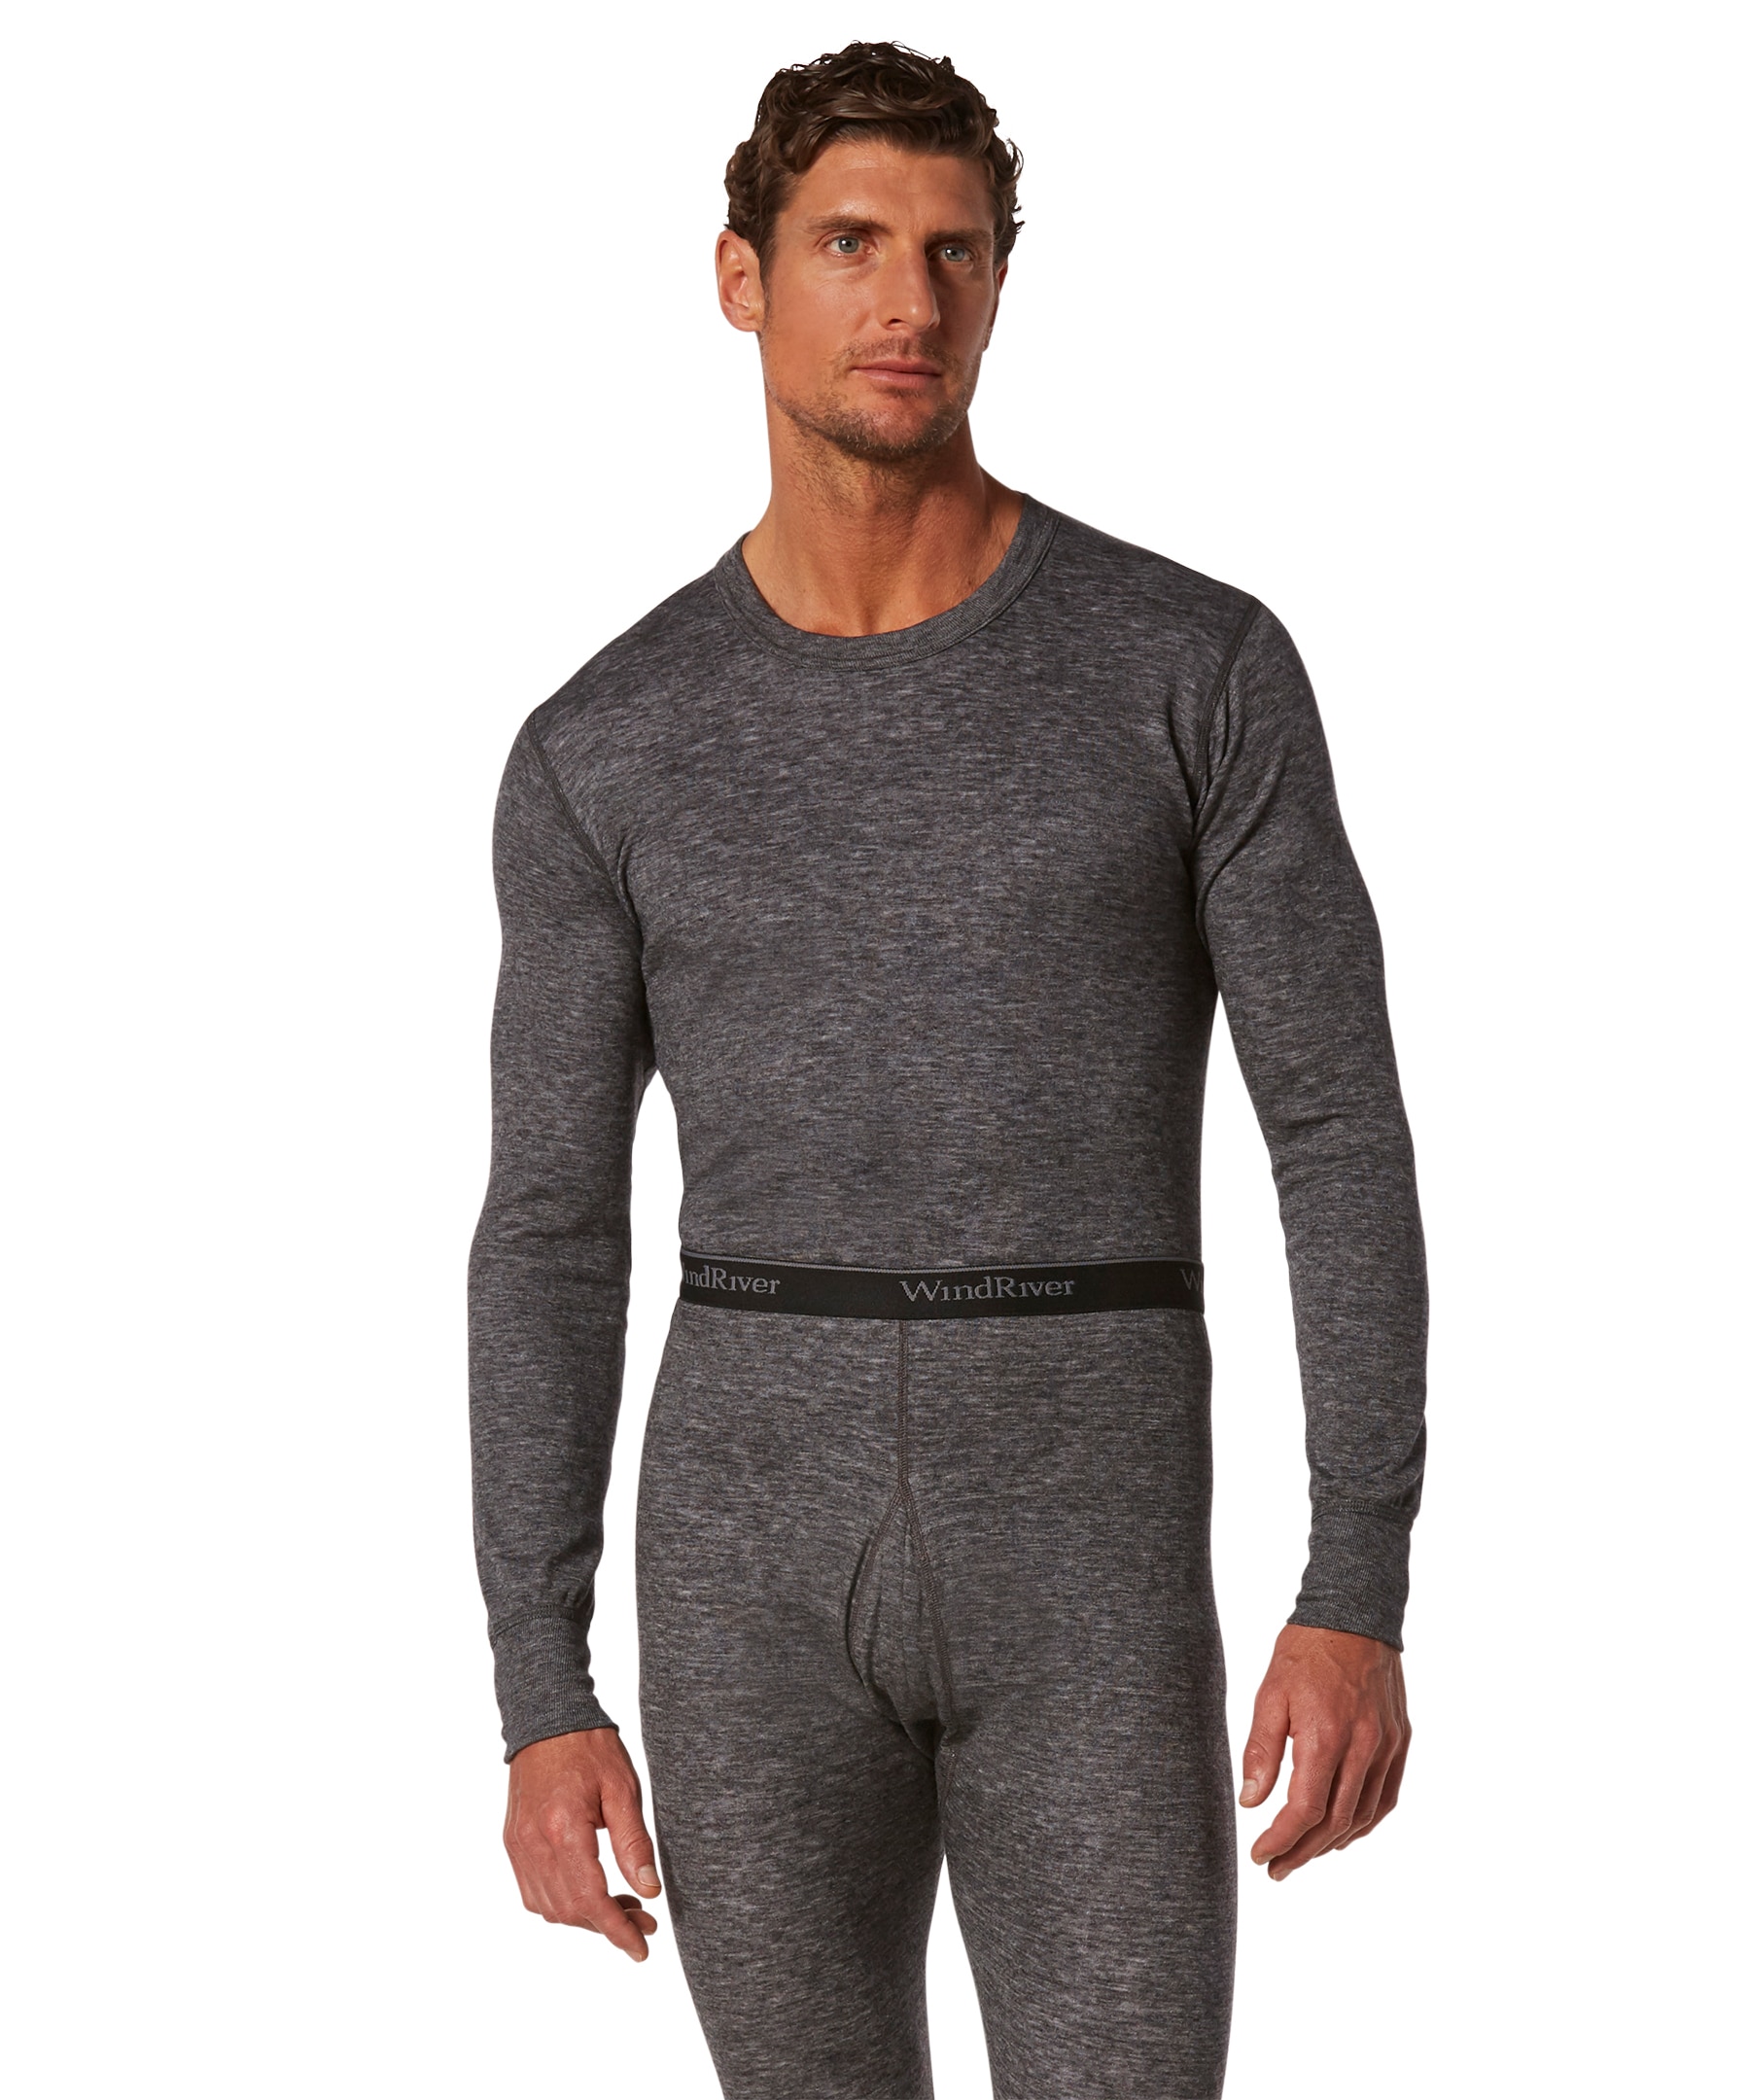 Men's Sleepwear Boxers - Natural Fiber Clothing